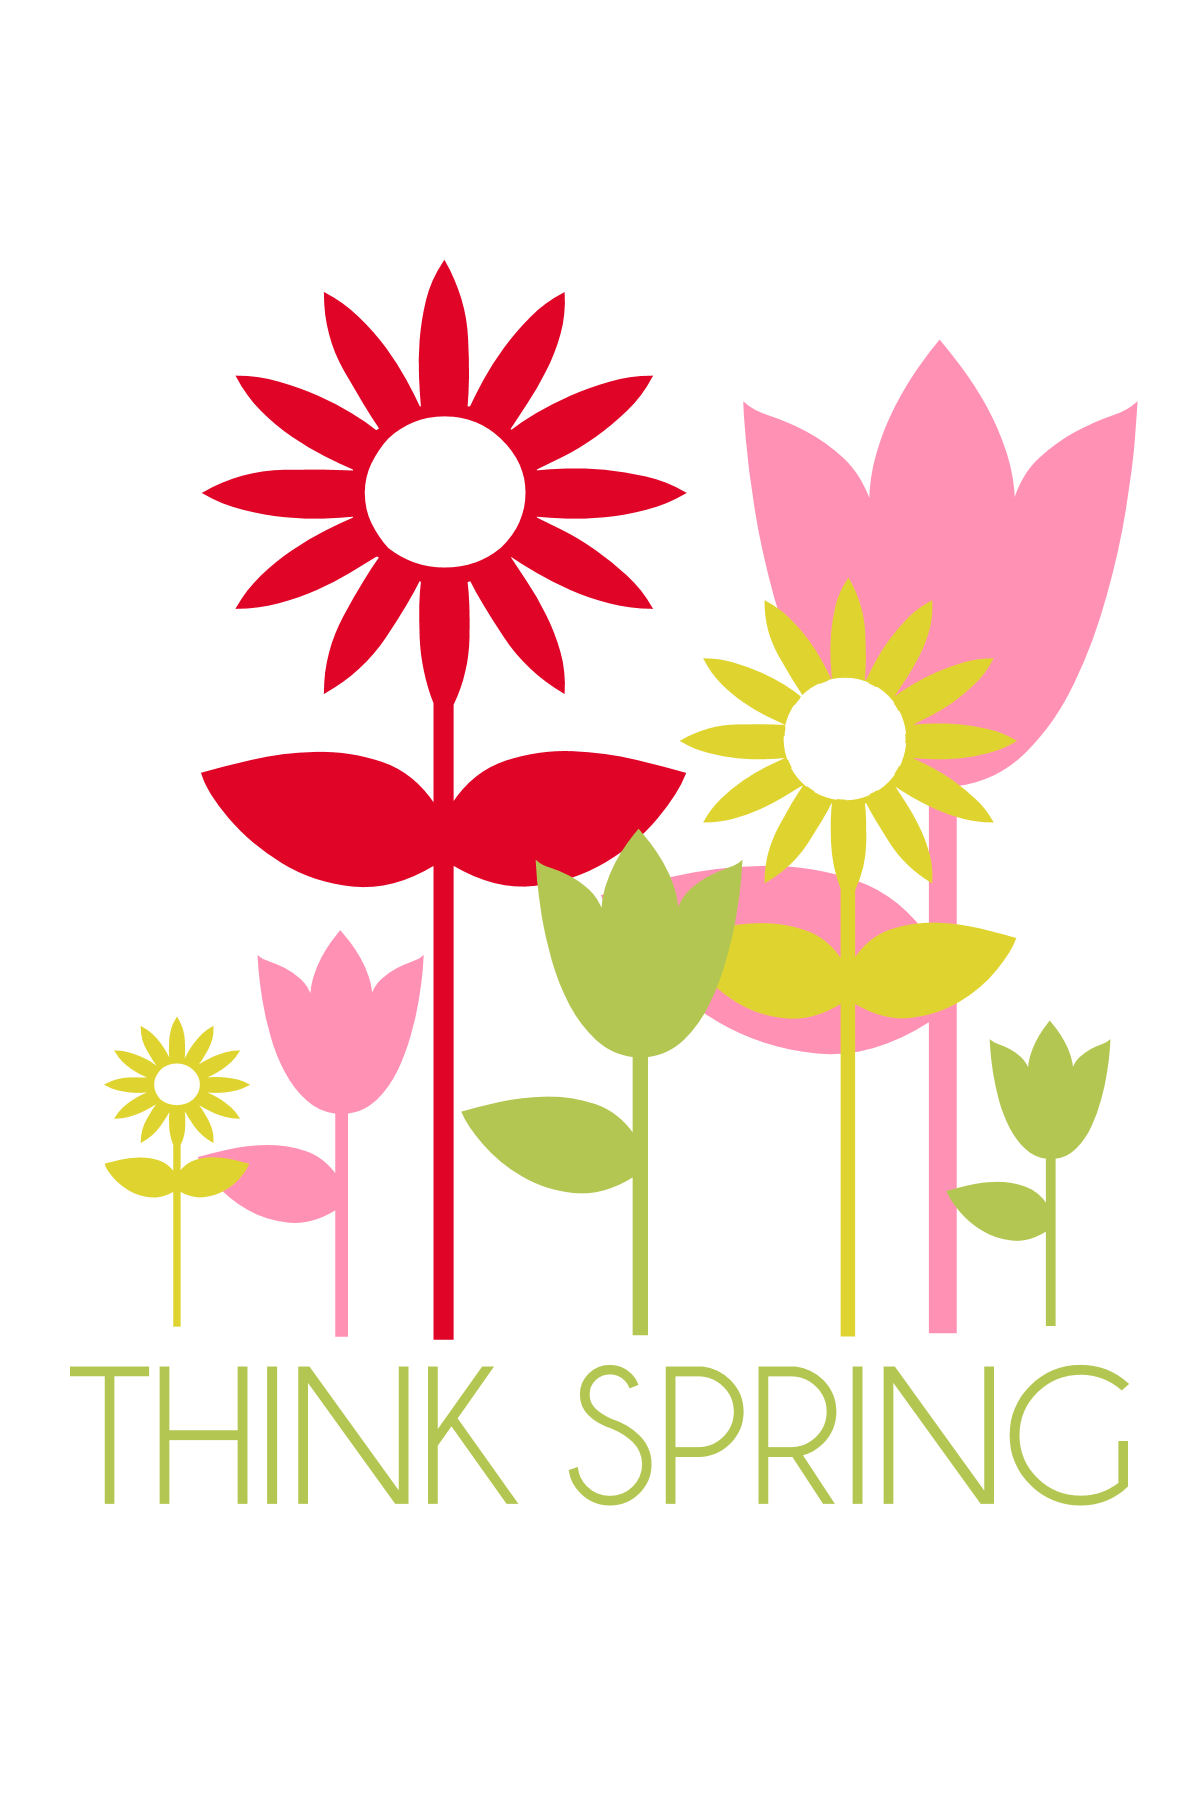 ... clip art art design and craft; think spring print 2 think spring free print on lilluna com put in a frame ...